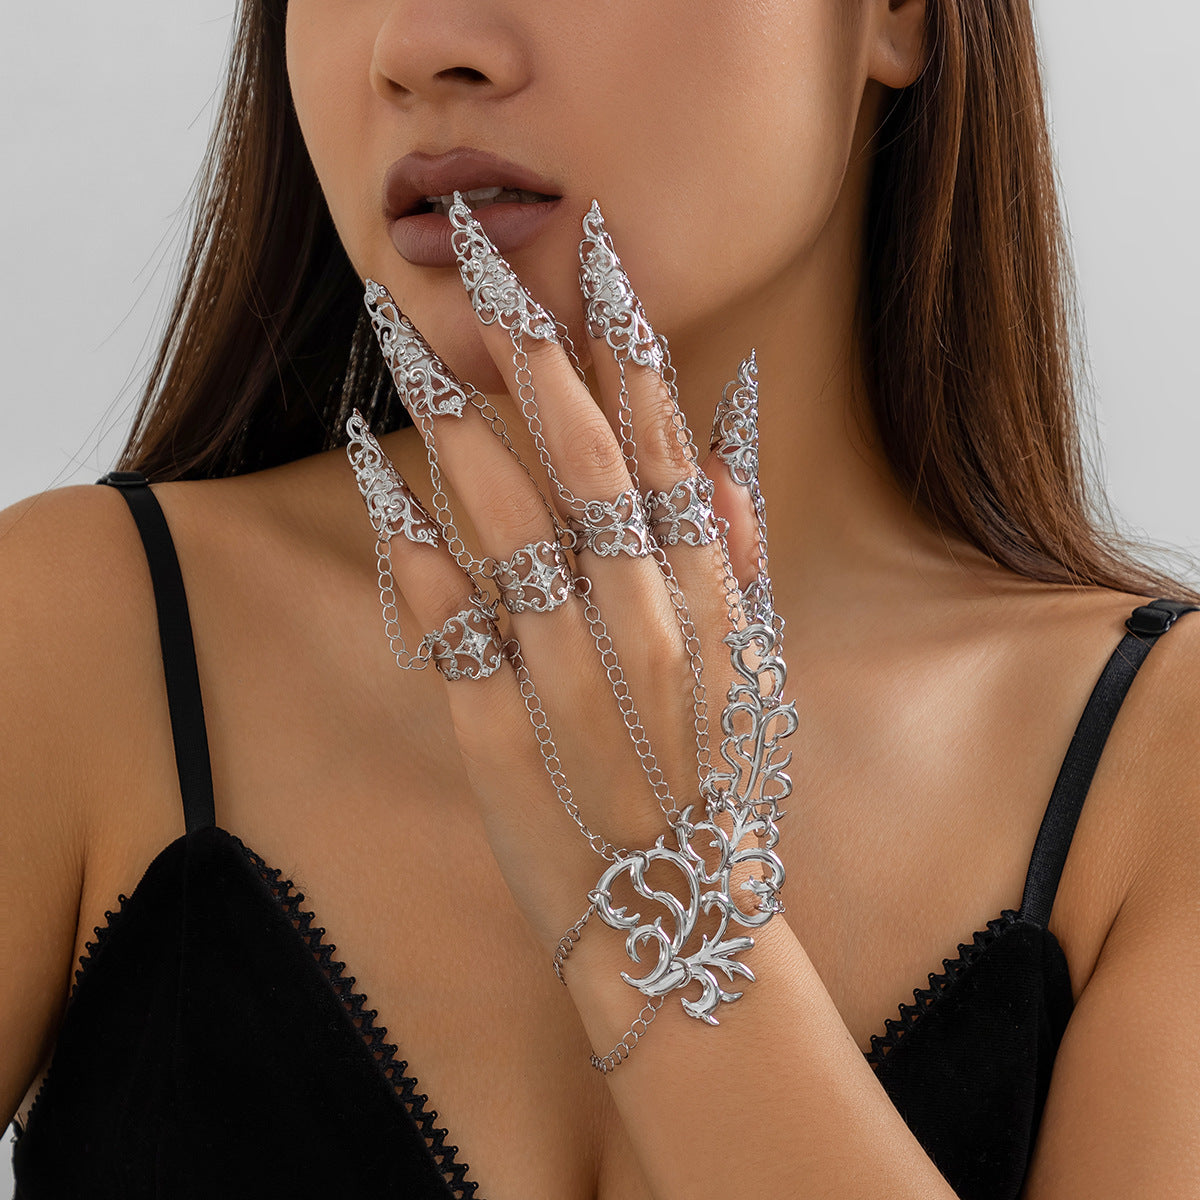 Hollow Tapered Fingernail Cap Mitten-type Bracelet Women 47g